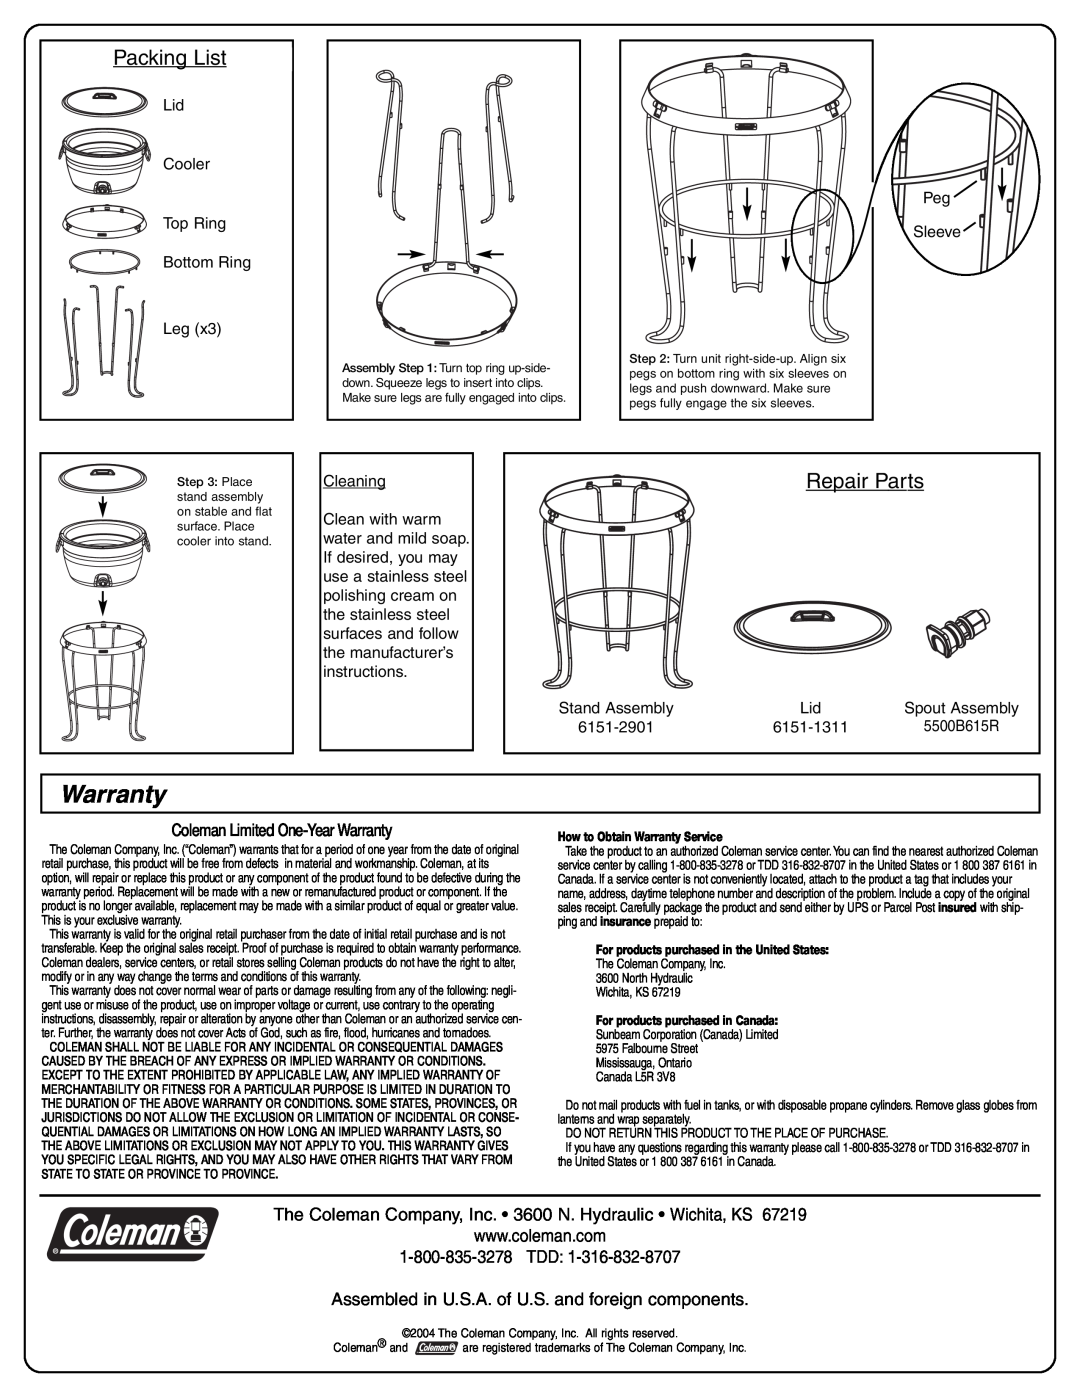 Coleman 6151-707 manual The Coleman Company, Inc. 3600 N. Hydraulic Wichita, KS, Warranty, Packing List, Repair Parts 